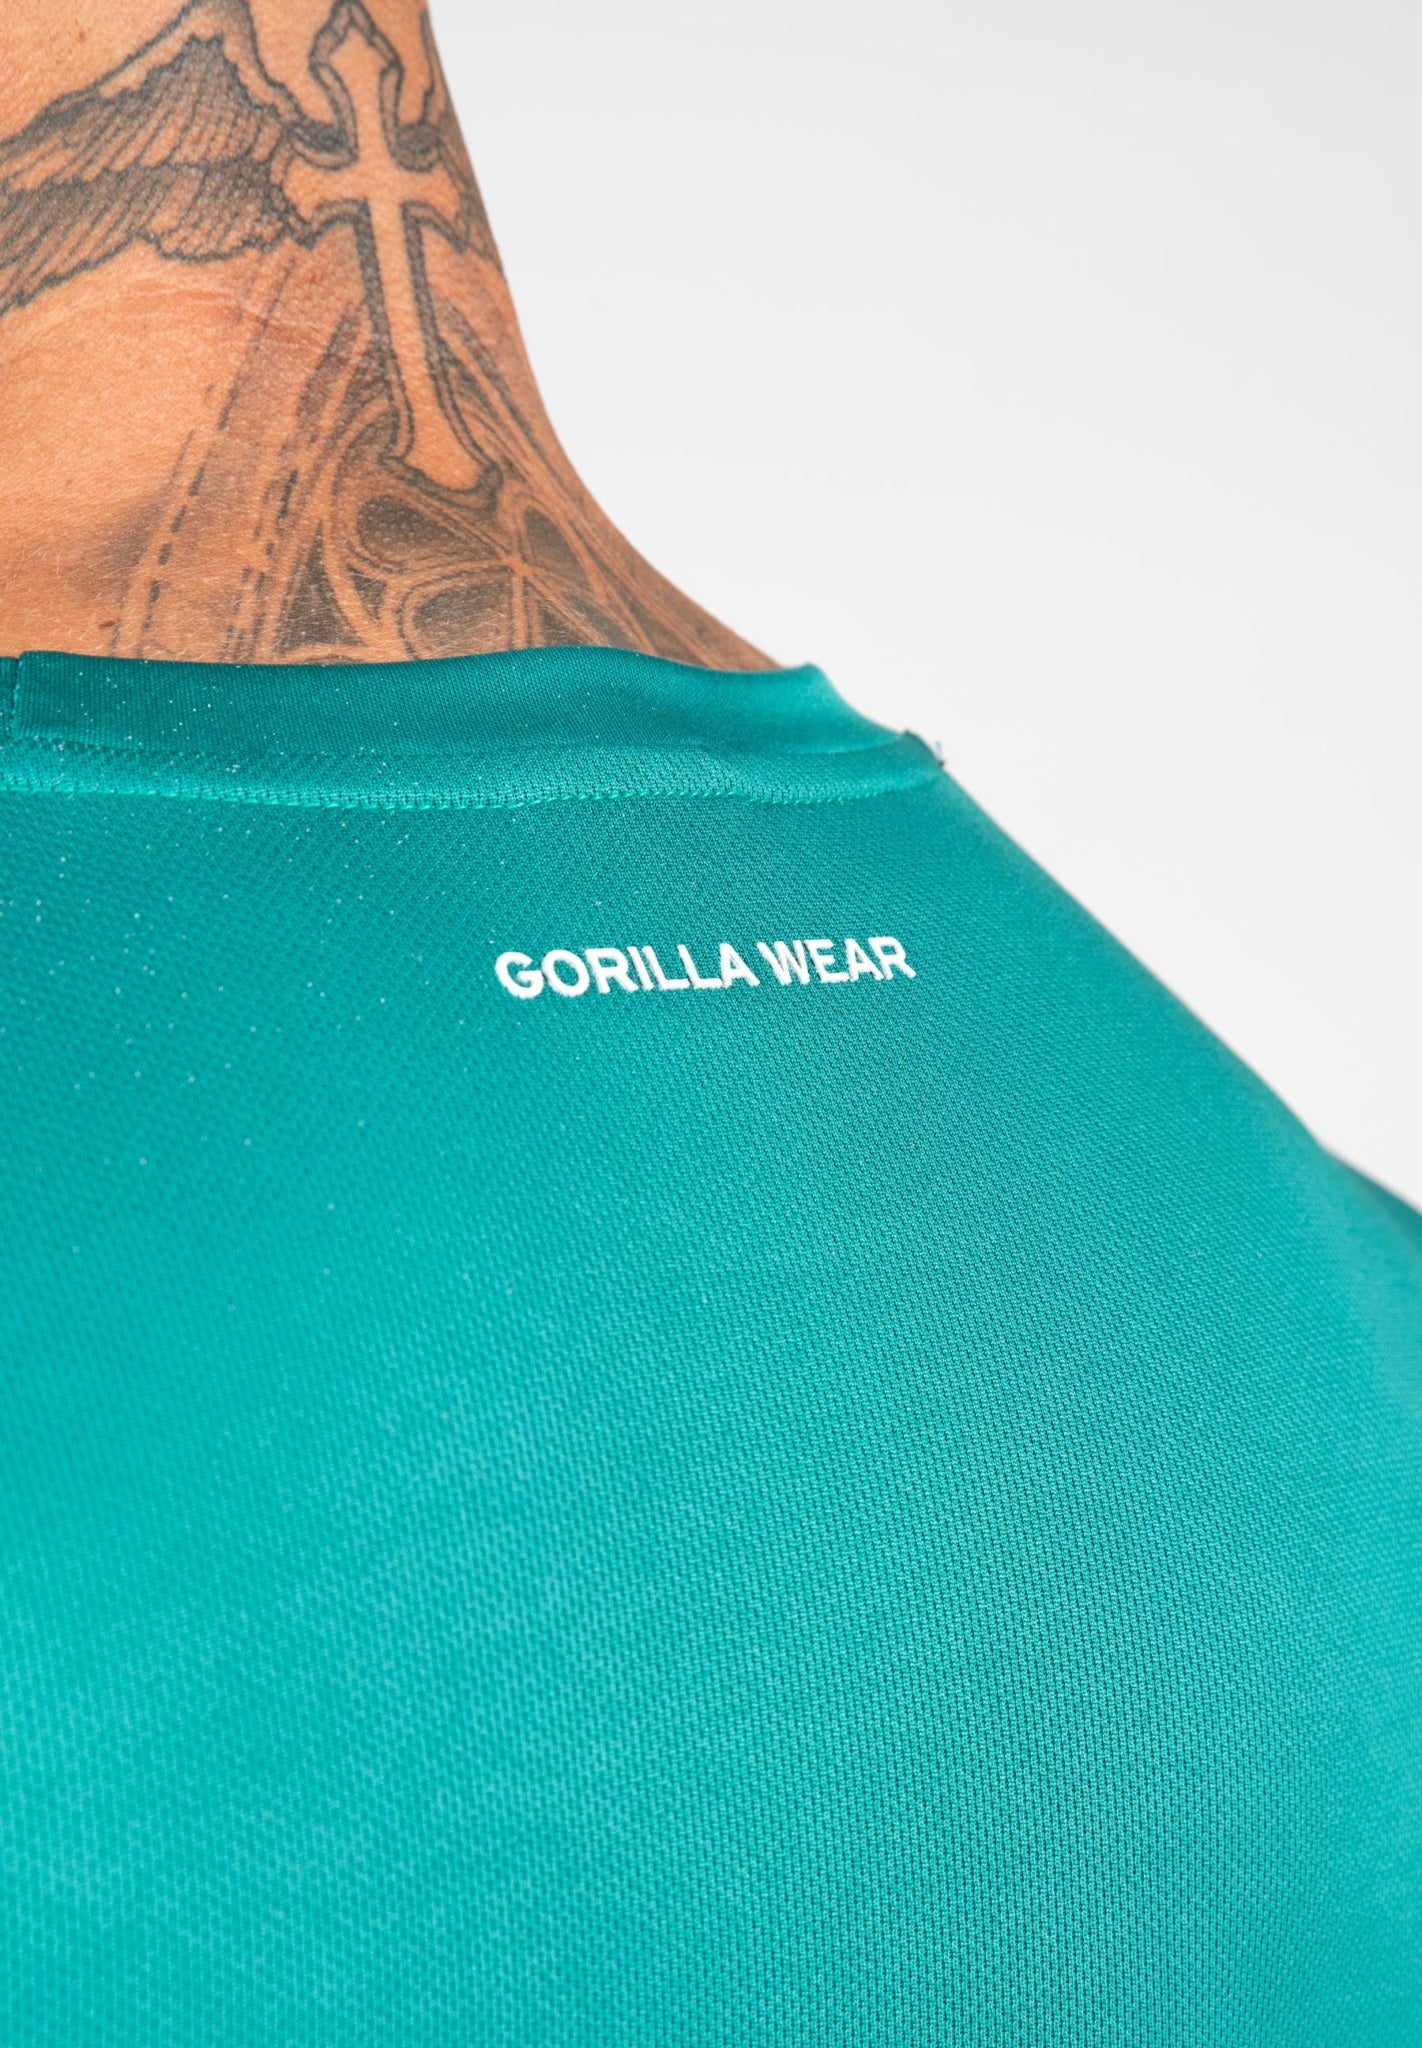 Gorilla Wear Vernon - Blaugrün